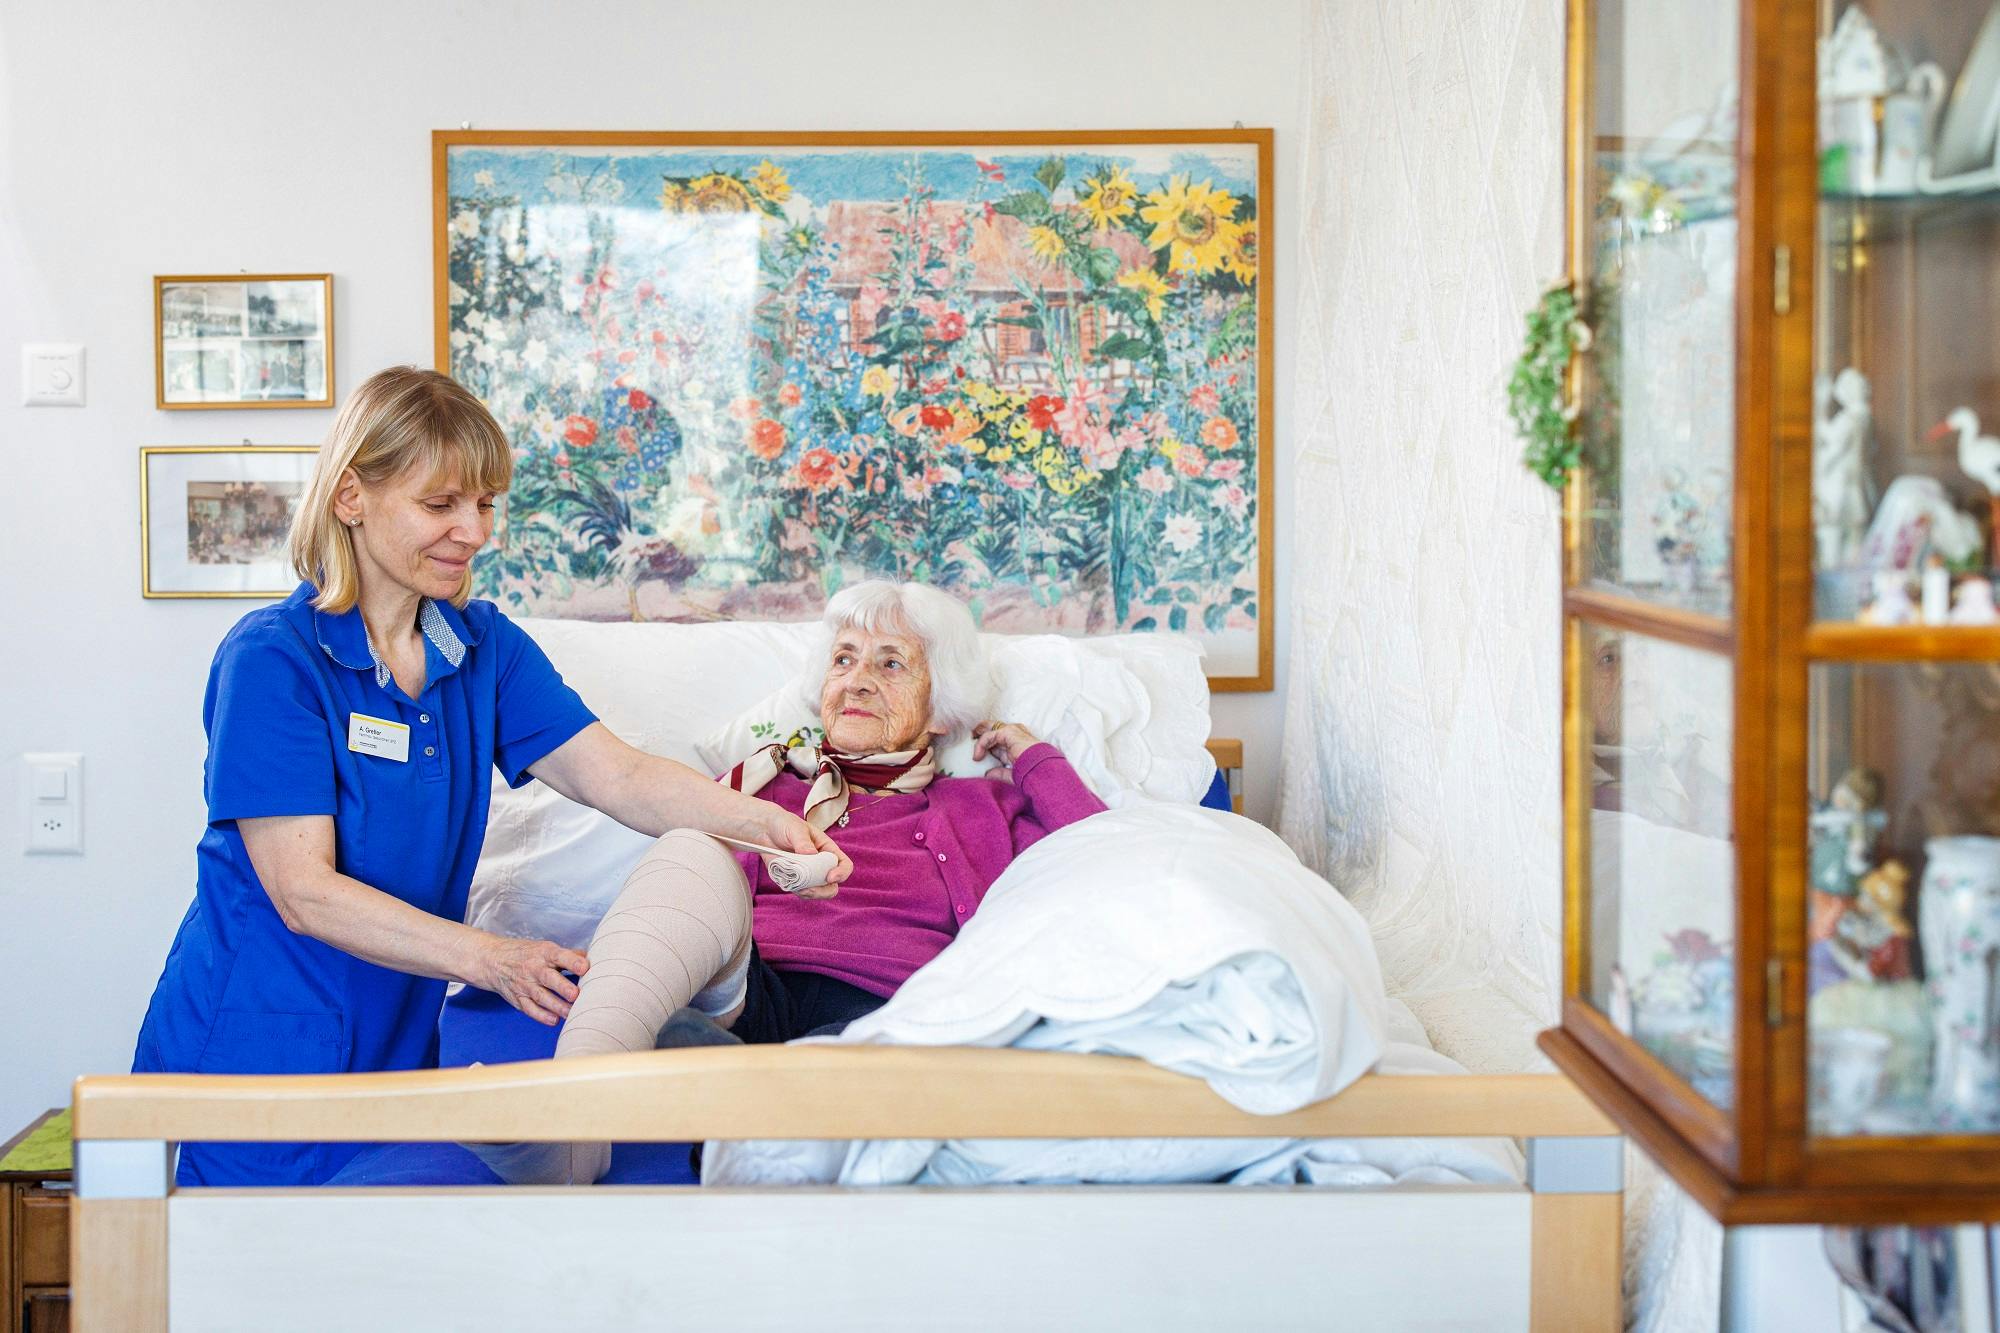 Pflegekraft betreut ältere Dame im Bett vor Blumenbild.